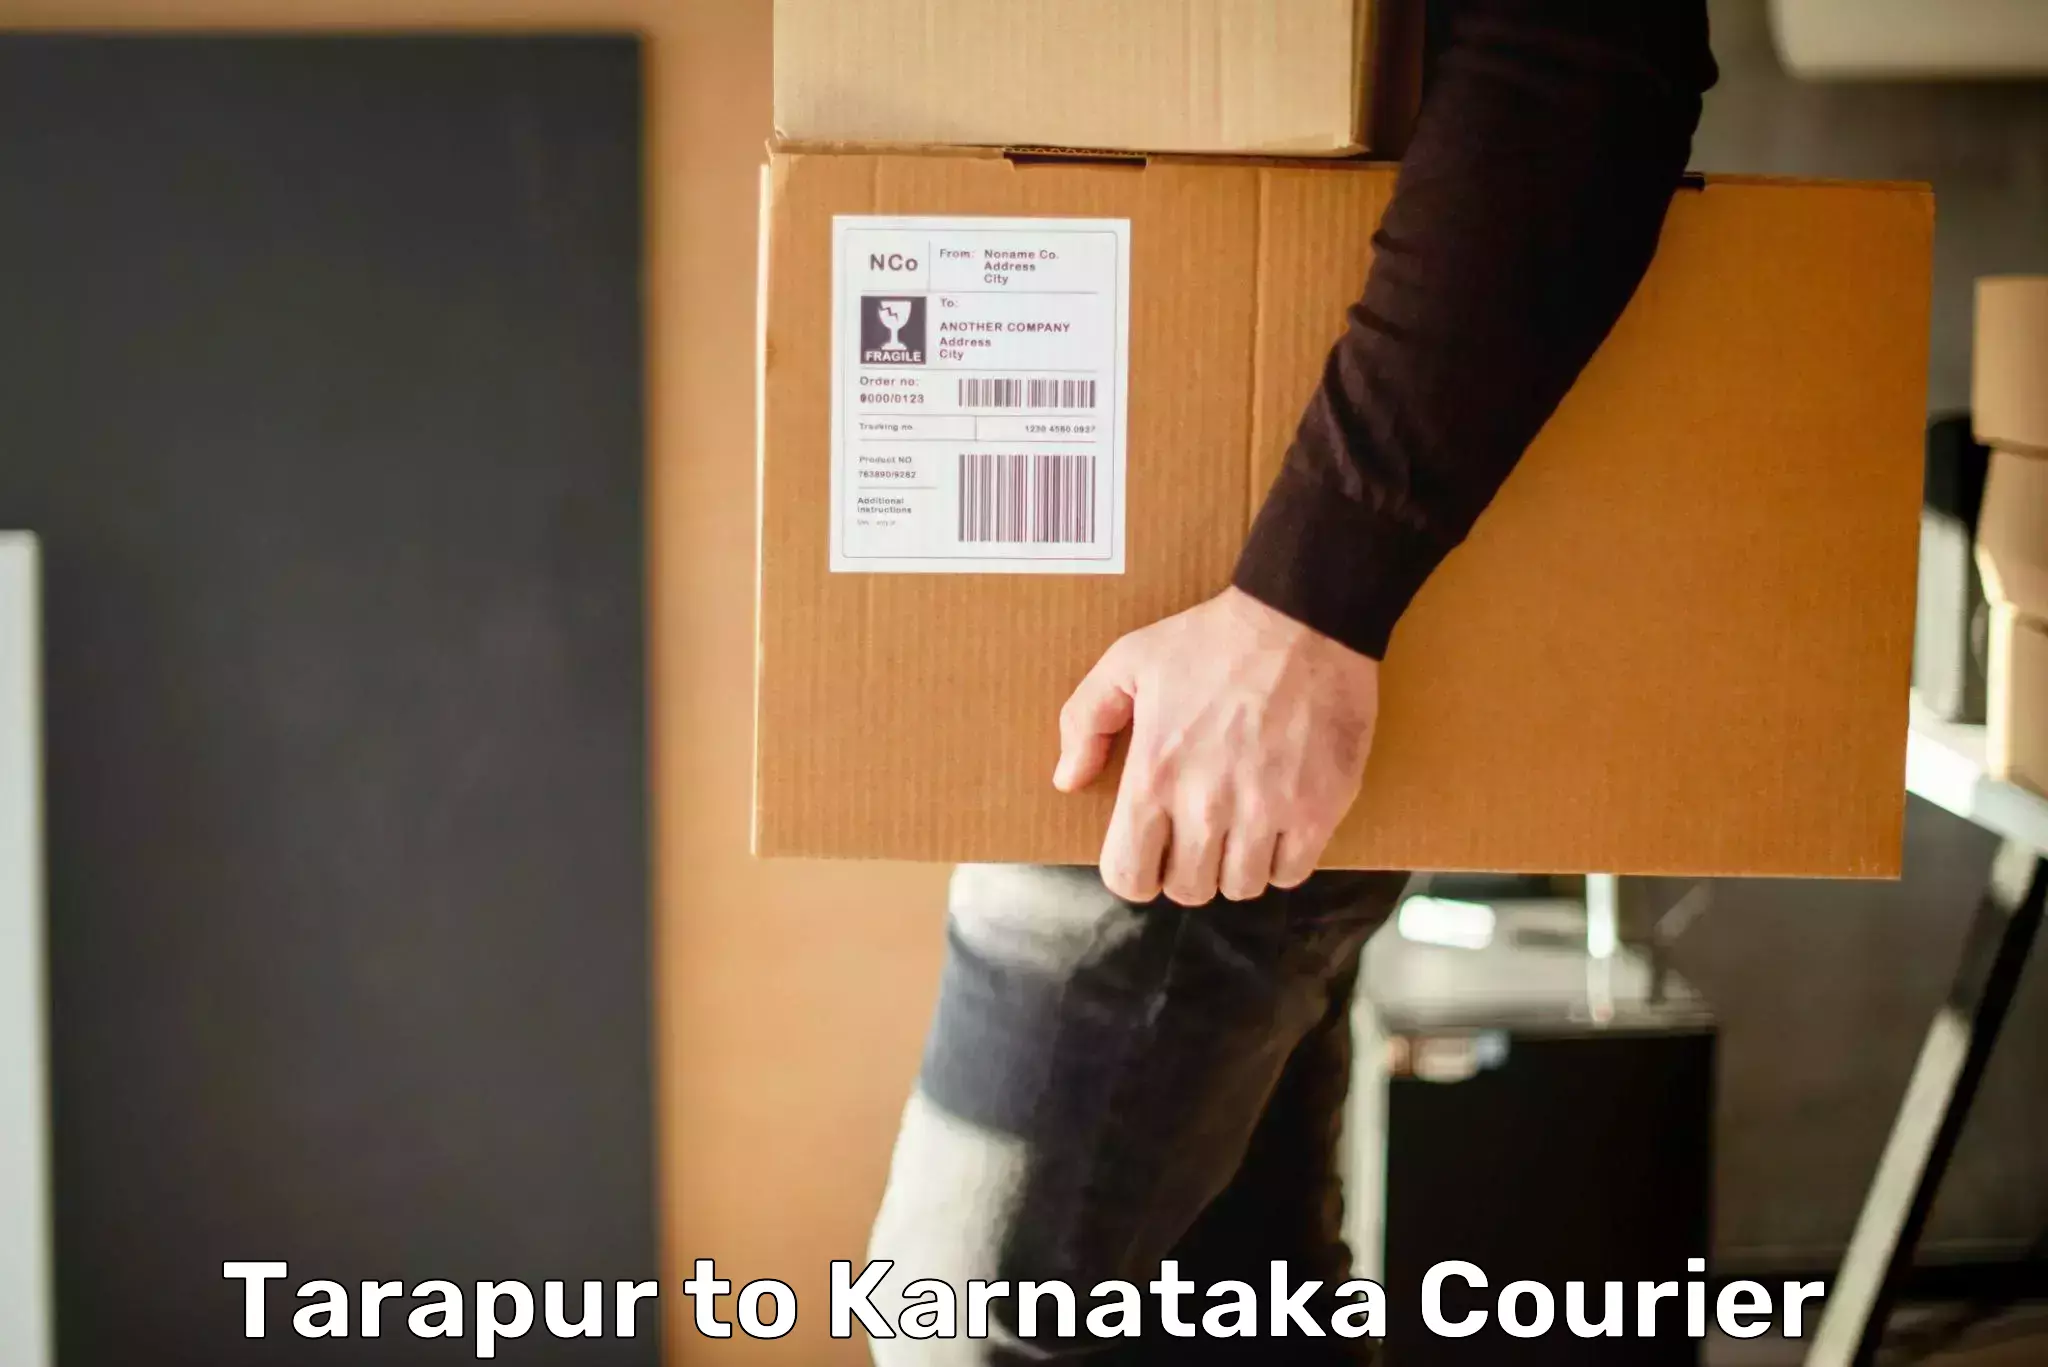 Professional courier handling Tarapur to Karnataka